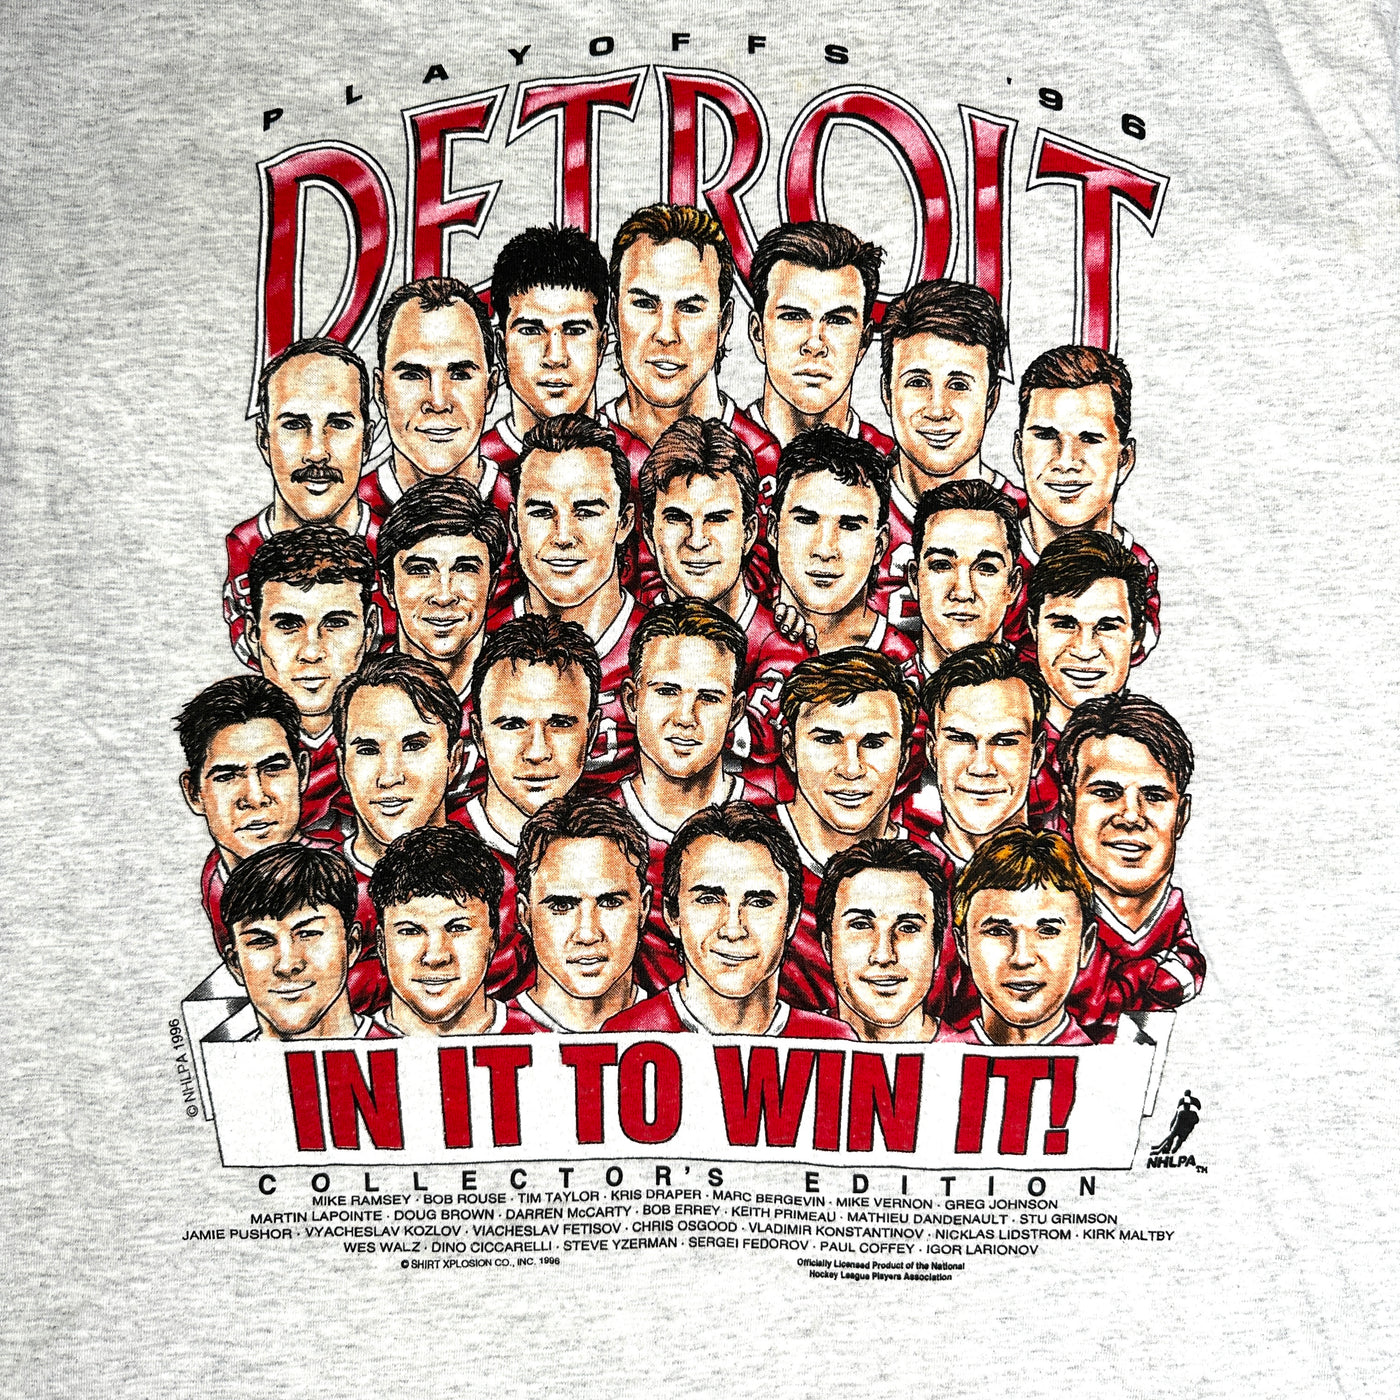 '96 Detroit Playoffs Grey Sports T-shirt sz L